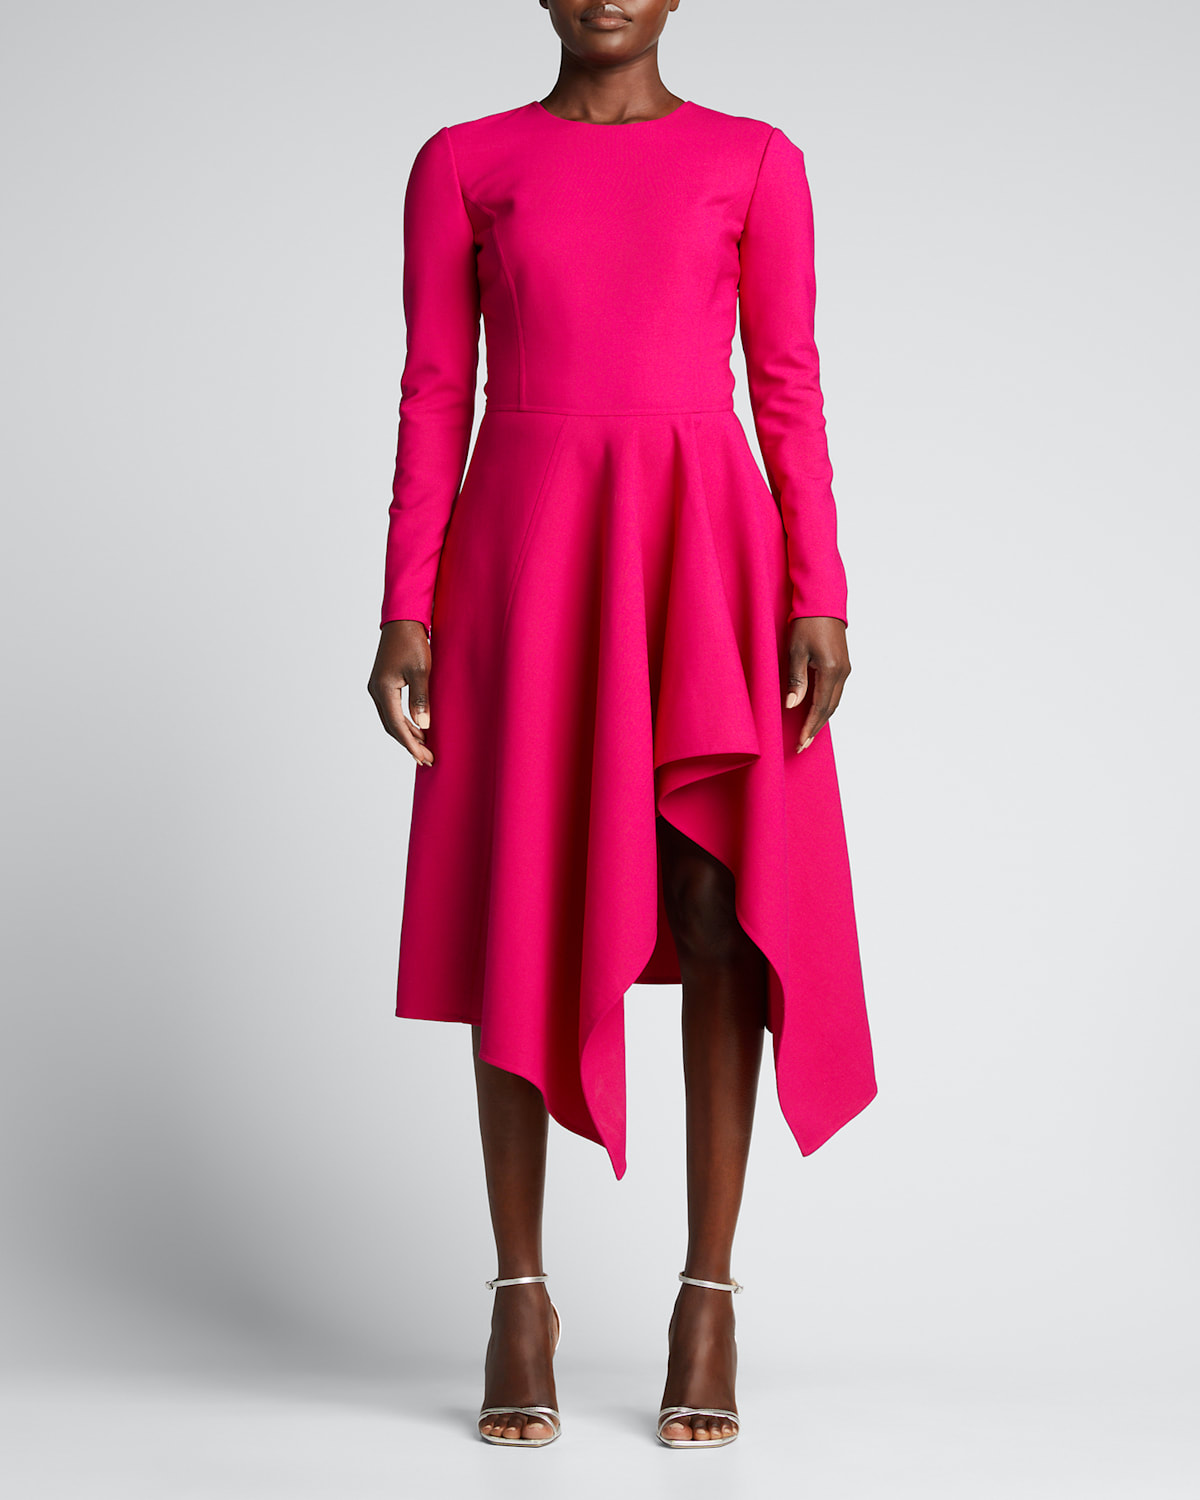 OSCAR DE LA RENTA Dresses for Women | ModeSens